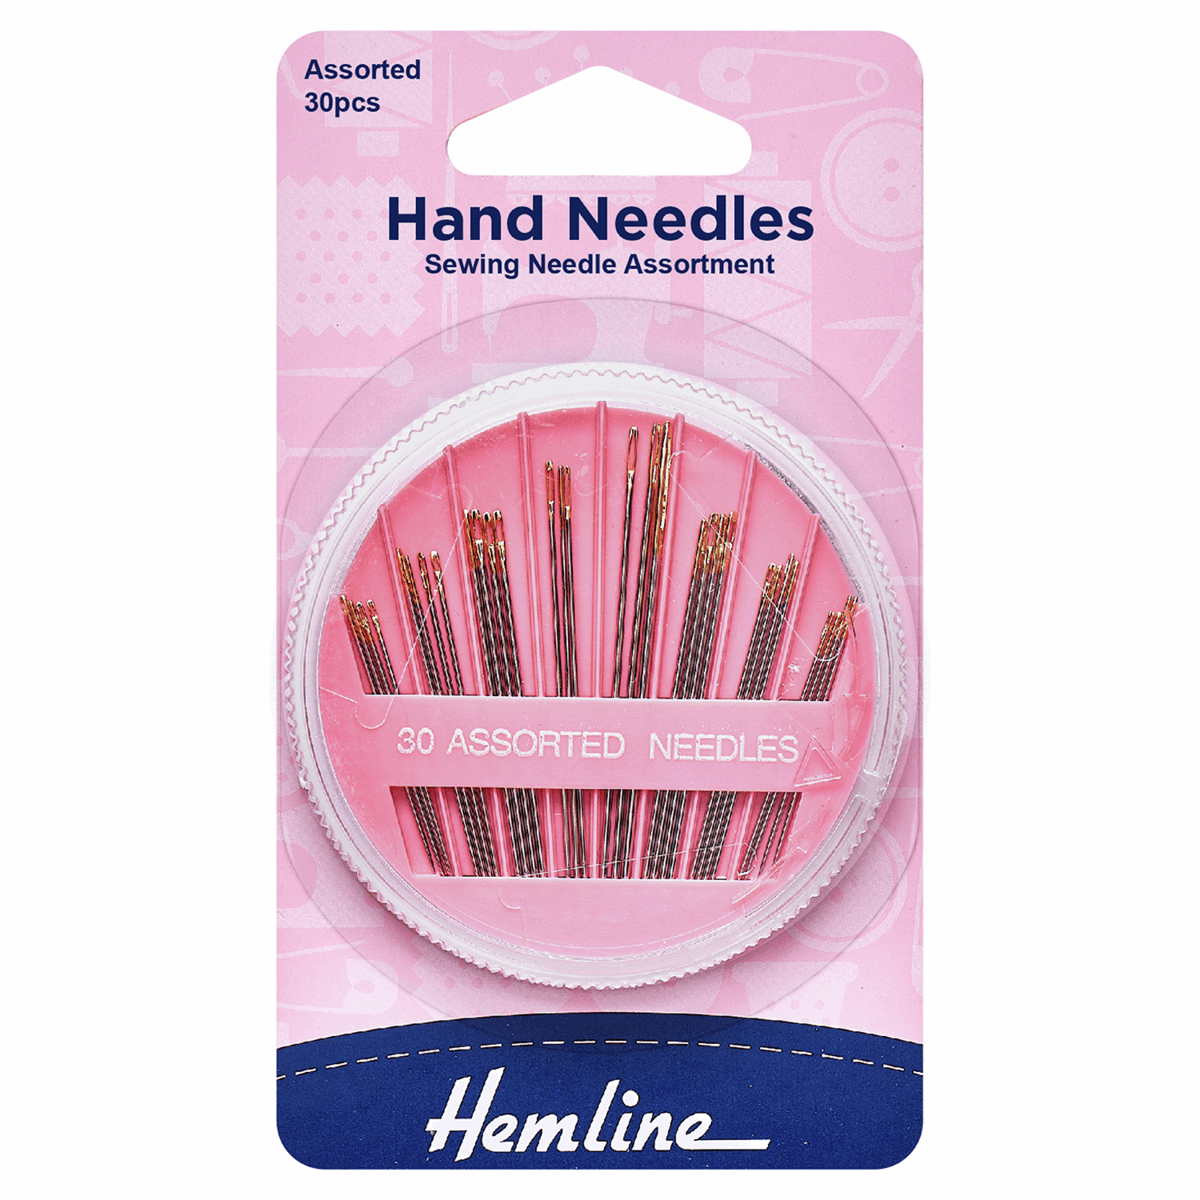 Hand Needles - Assortment (30pcs)